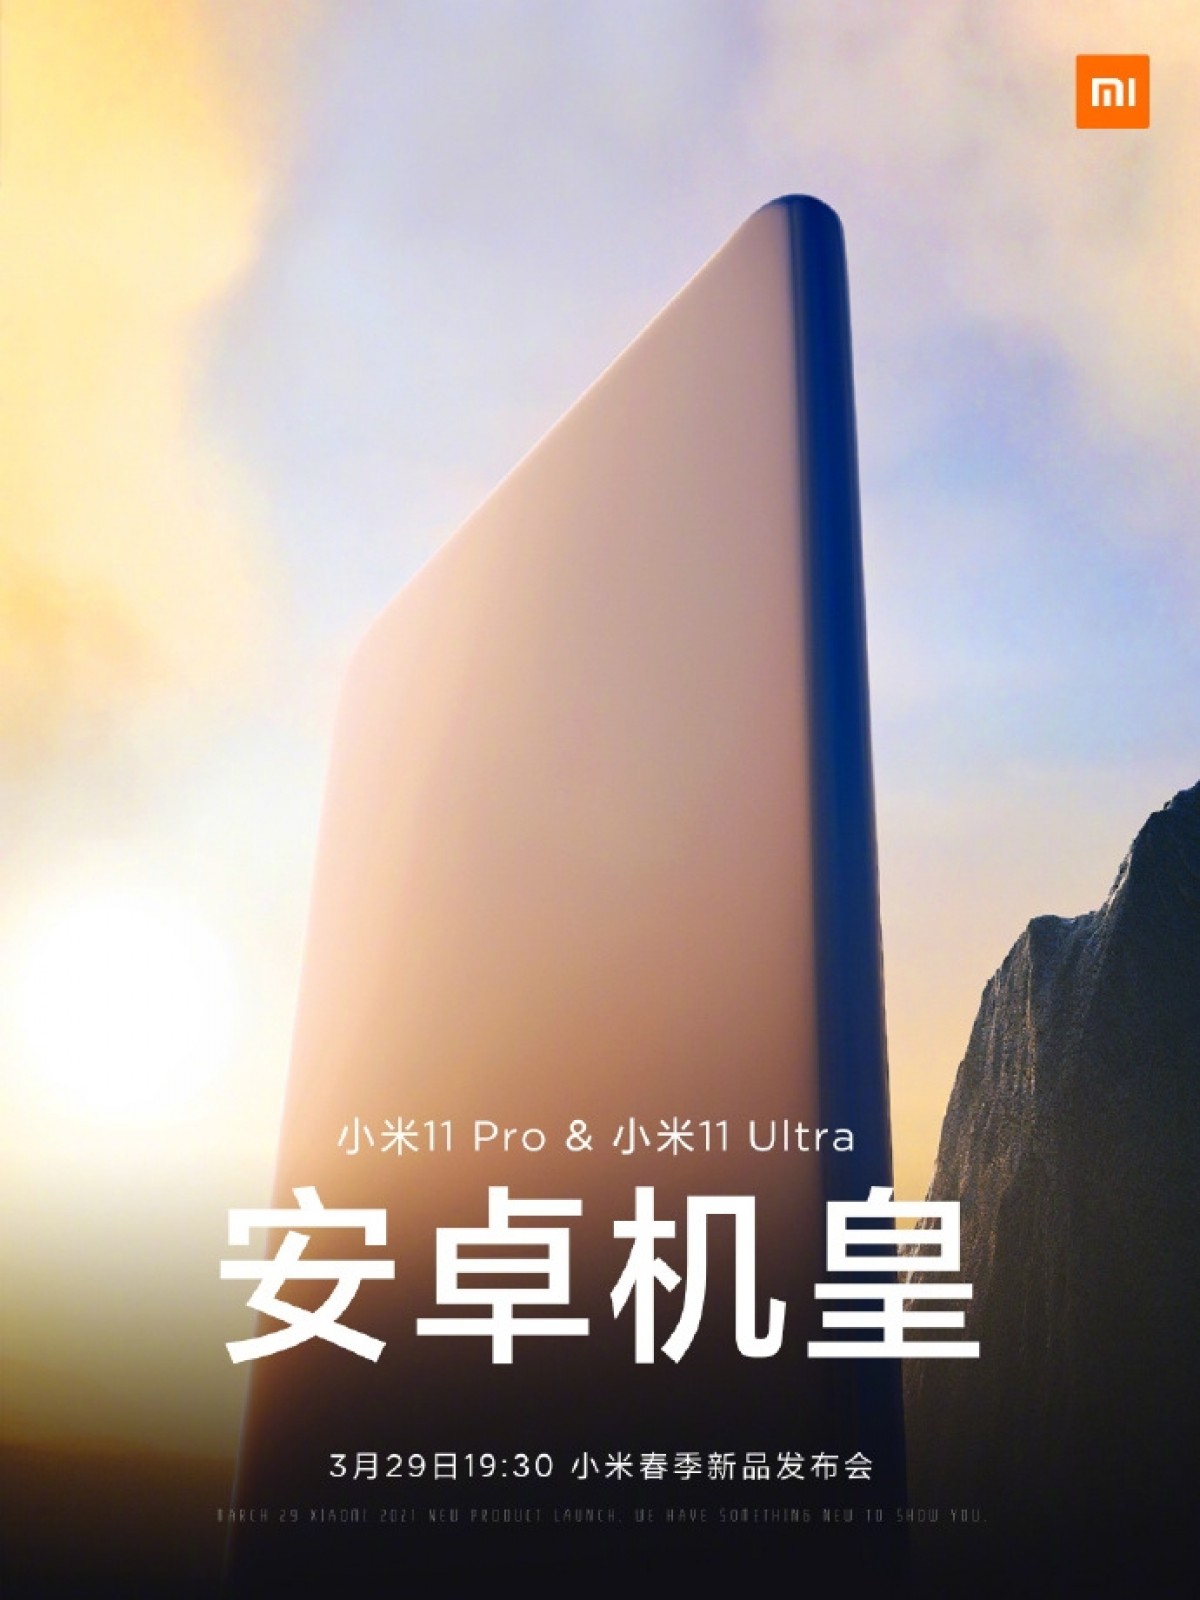 Xiaomi Mi Mix Pro Ultra 11 Models Launch March